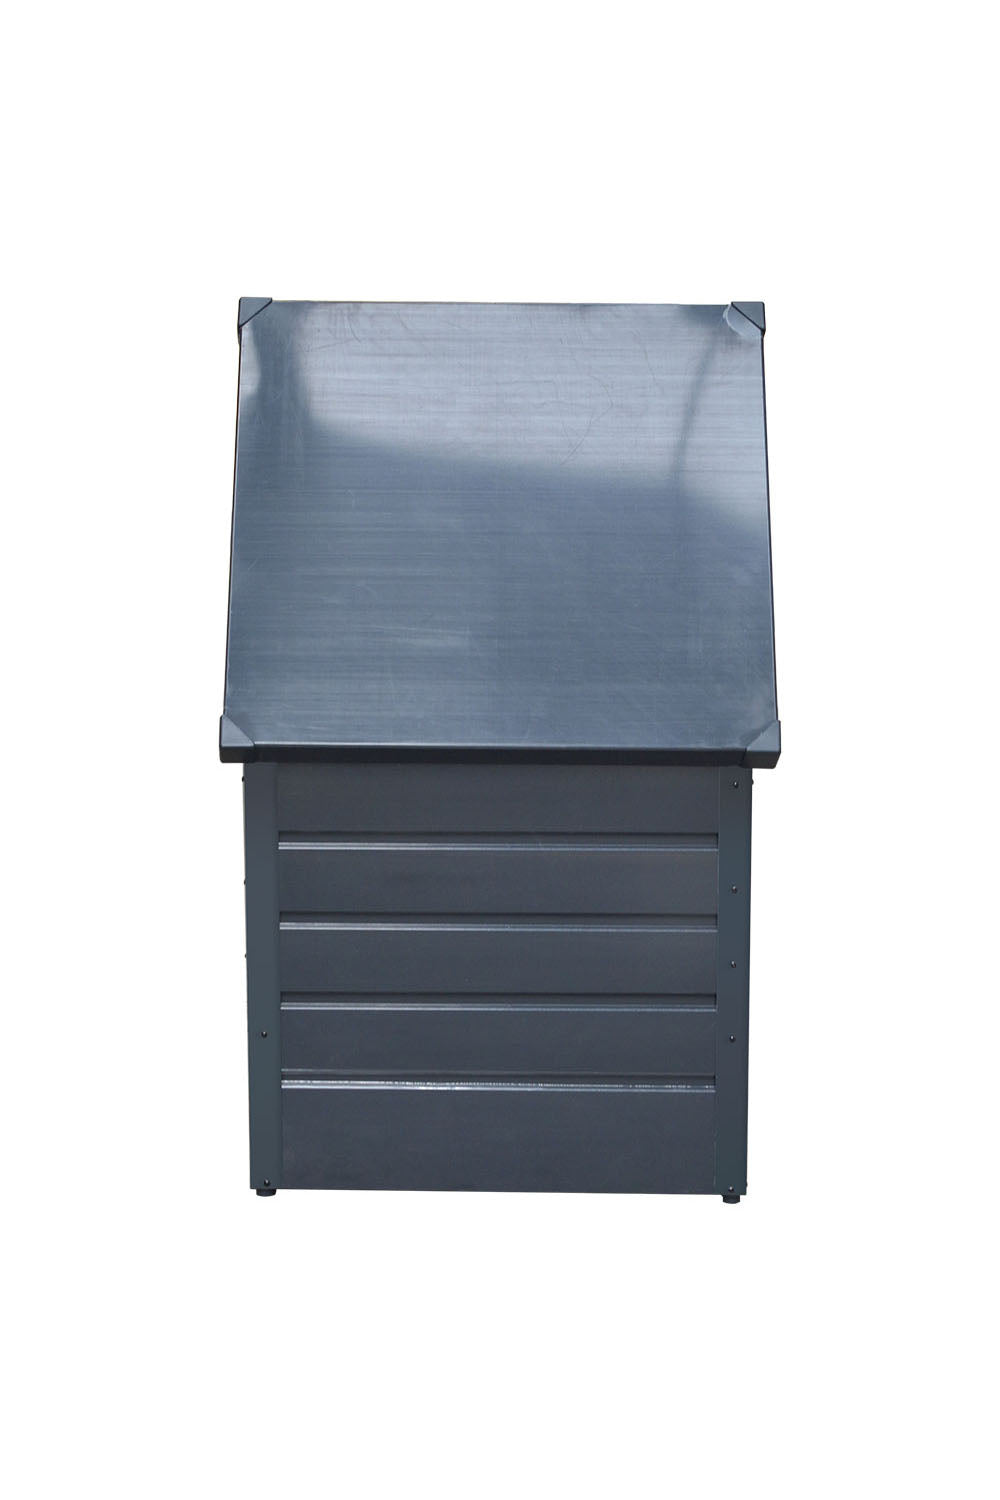 350L Steel Lockable Garden Storage Box Patio Waterproof Box